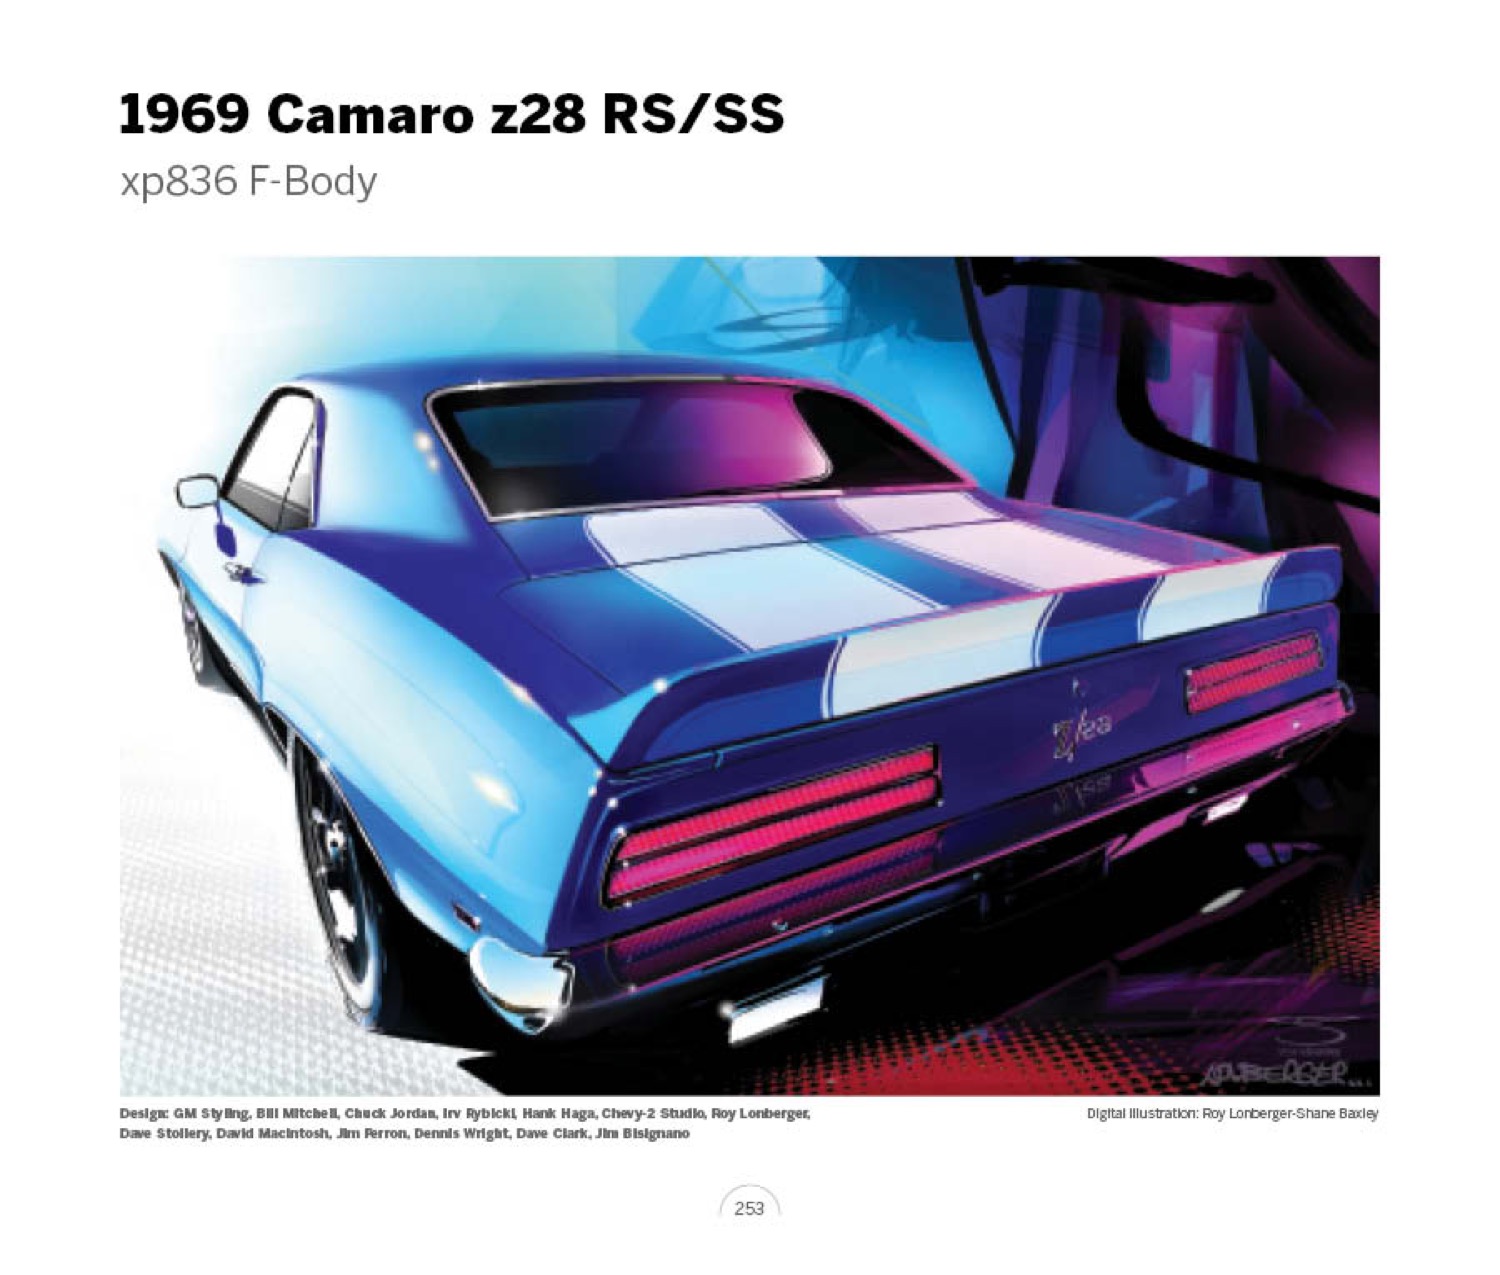 (41) 1969 Camaro xp836-sketch LoRez.jpg